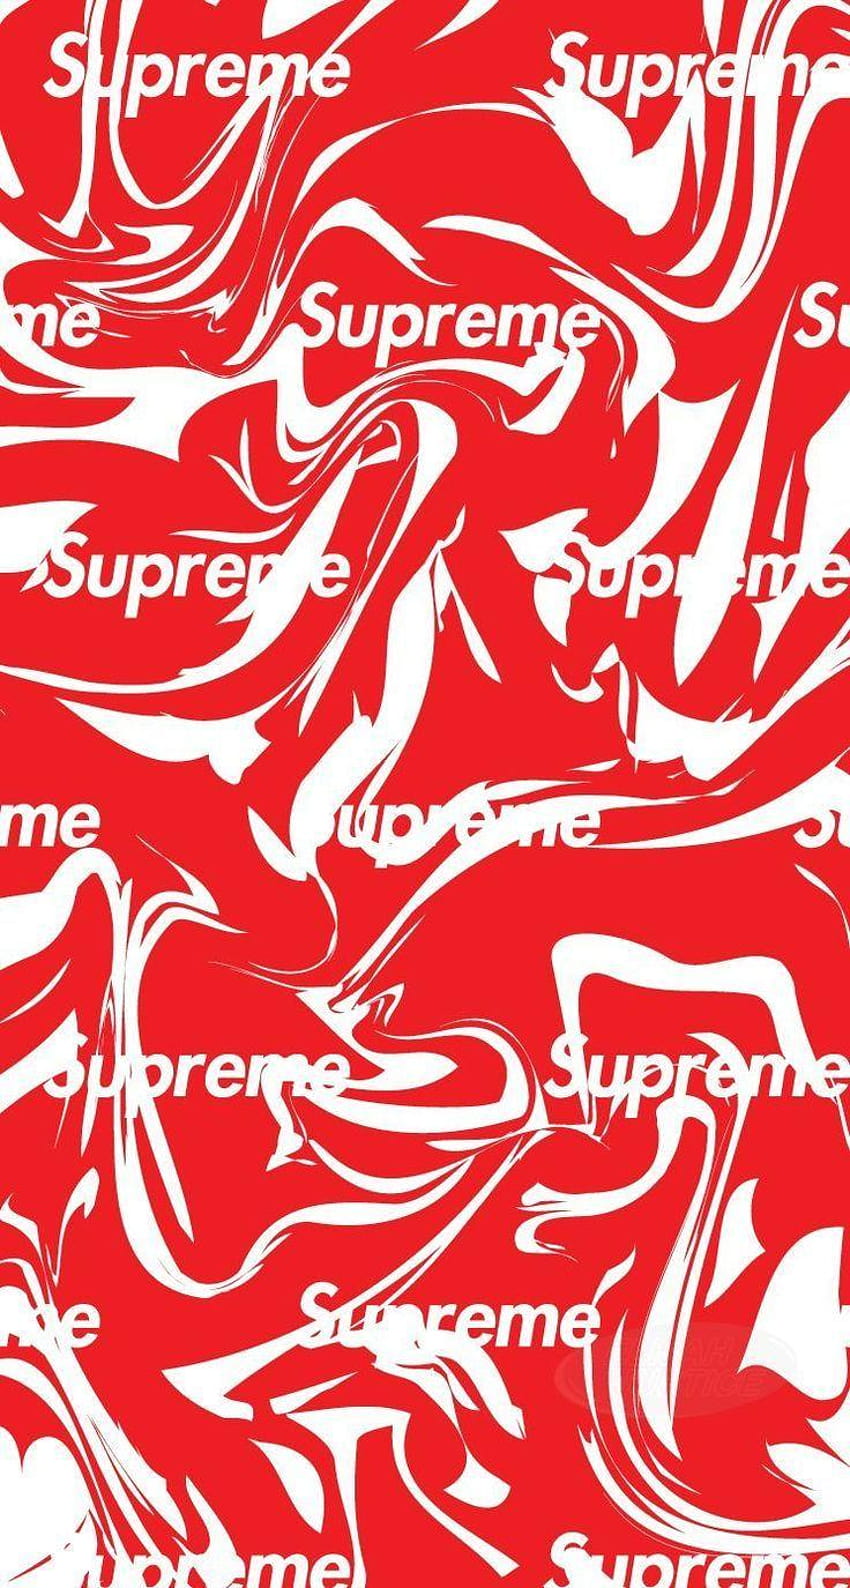 Supreme and Loui wallpaper  Supreme iphone wallpaper, Supreme wallpaper, Louis  vuitton iphone wallpaper